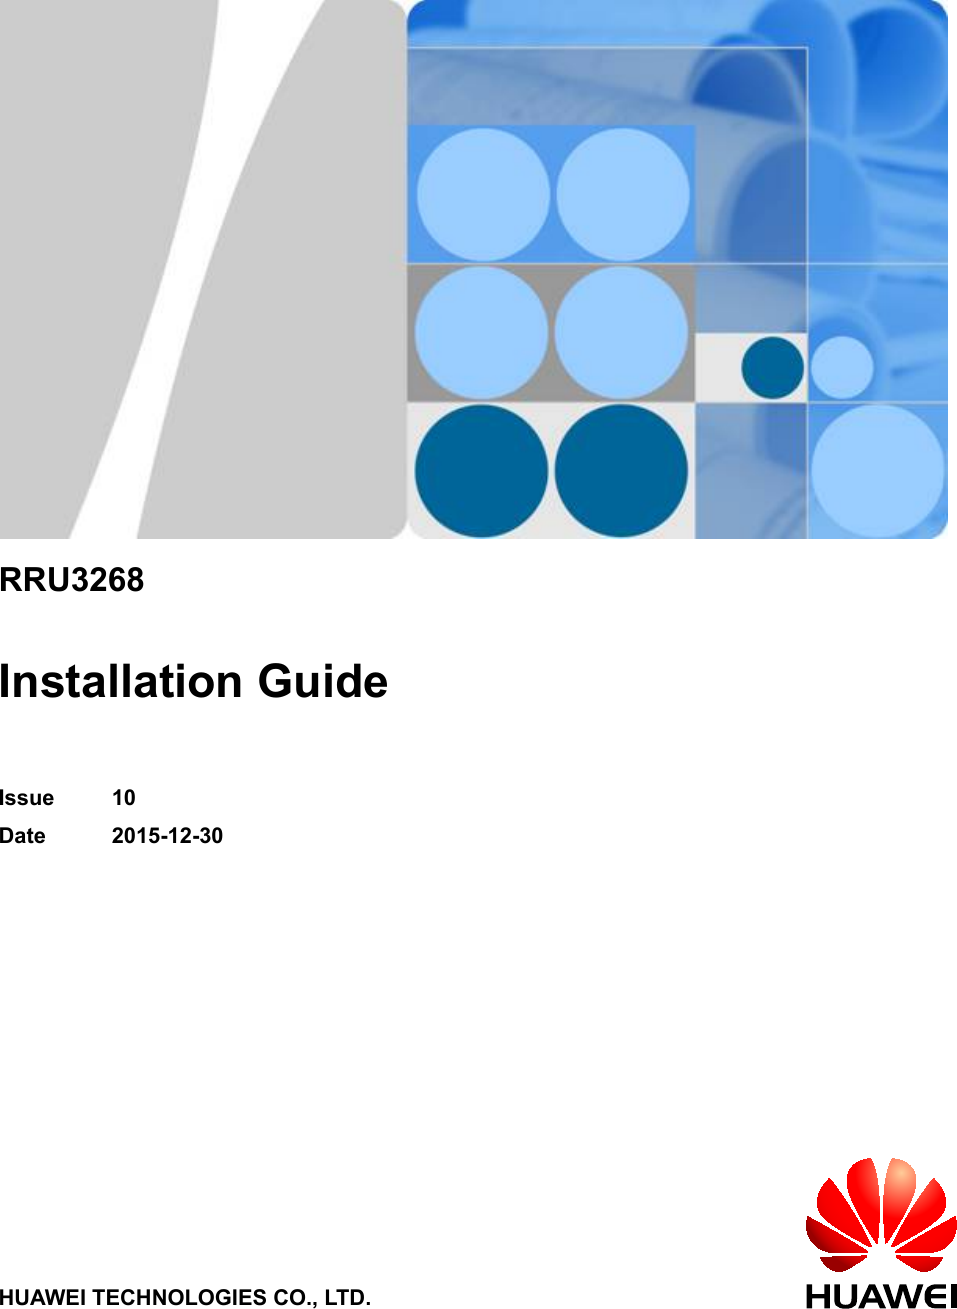 RRU3268Installation GuideIssue 10Date 2015-12-30HUAWEI TECHNOLOGIES CO., LTD.